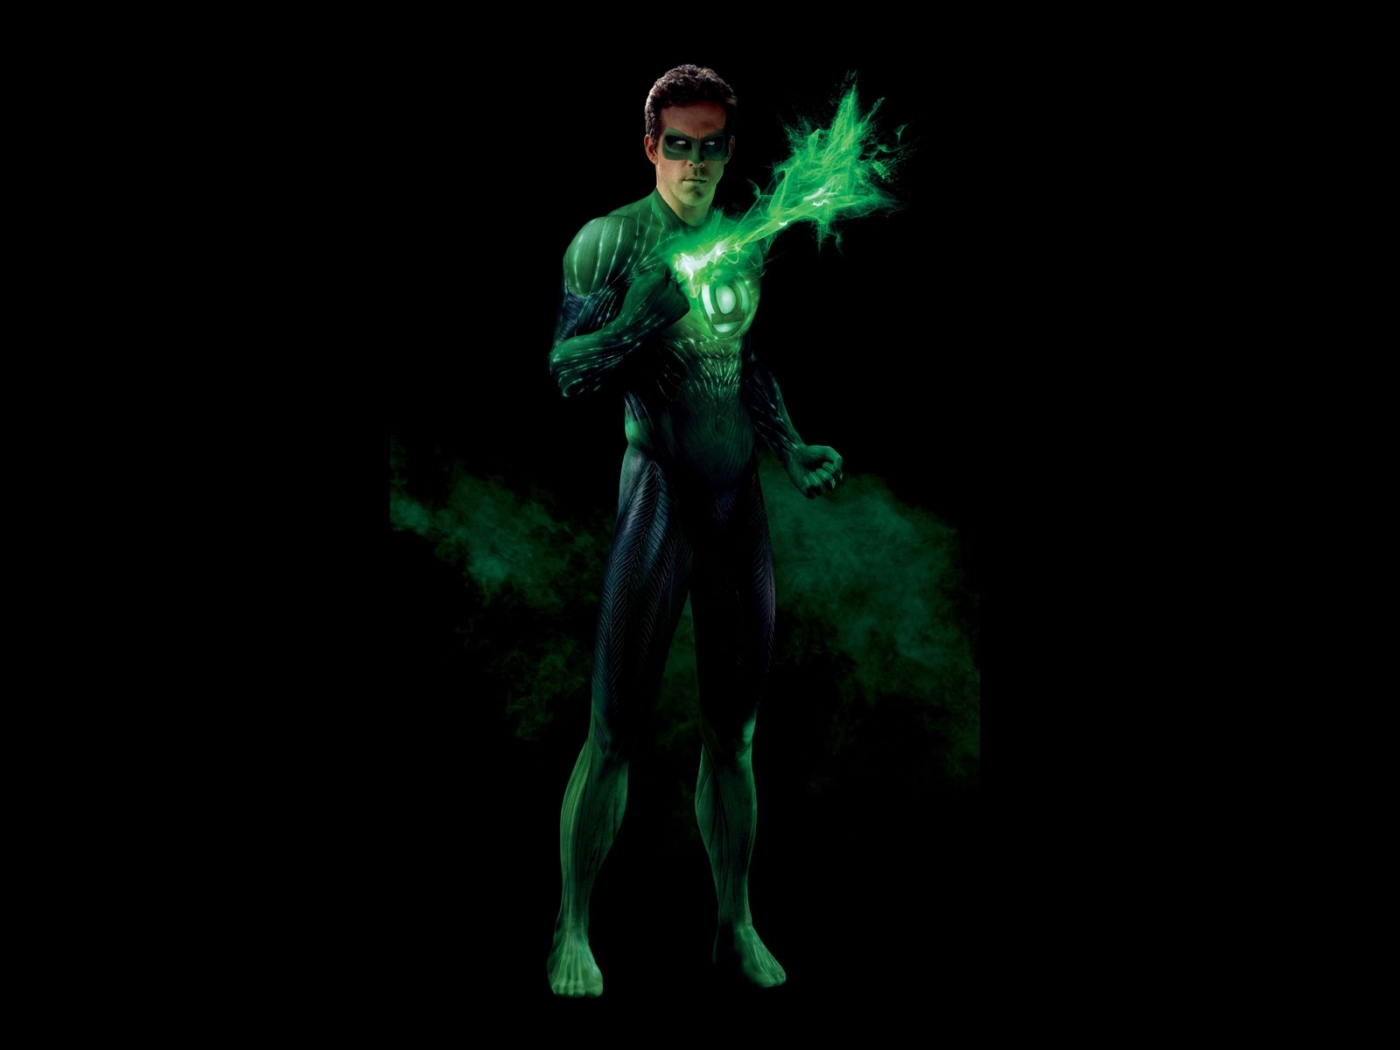 Popular Green Lantern images for mobile phone